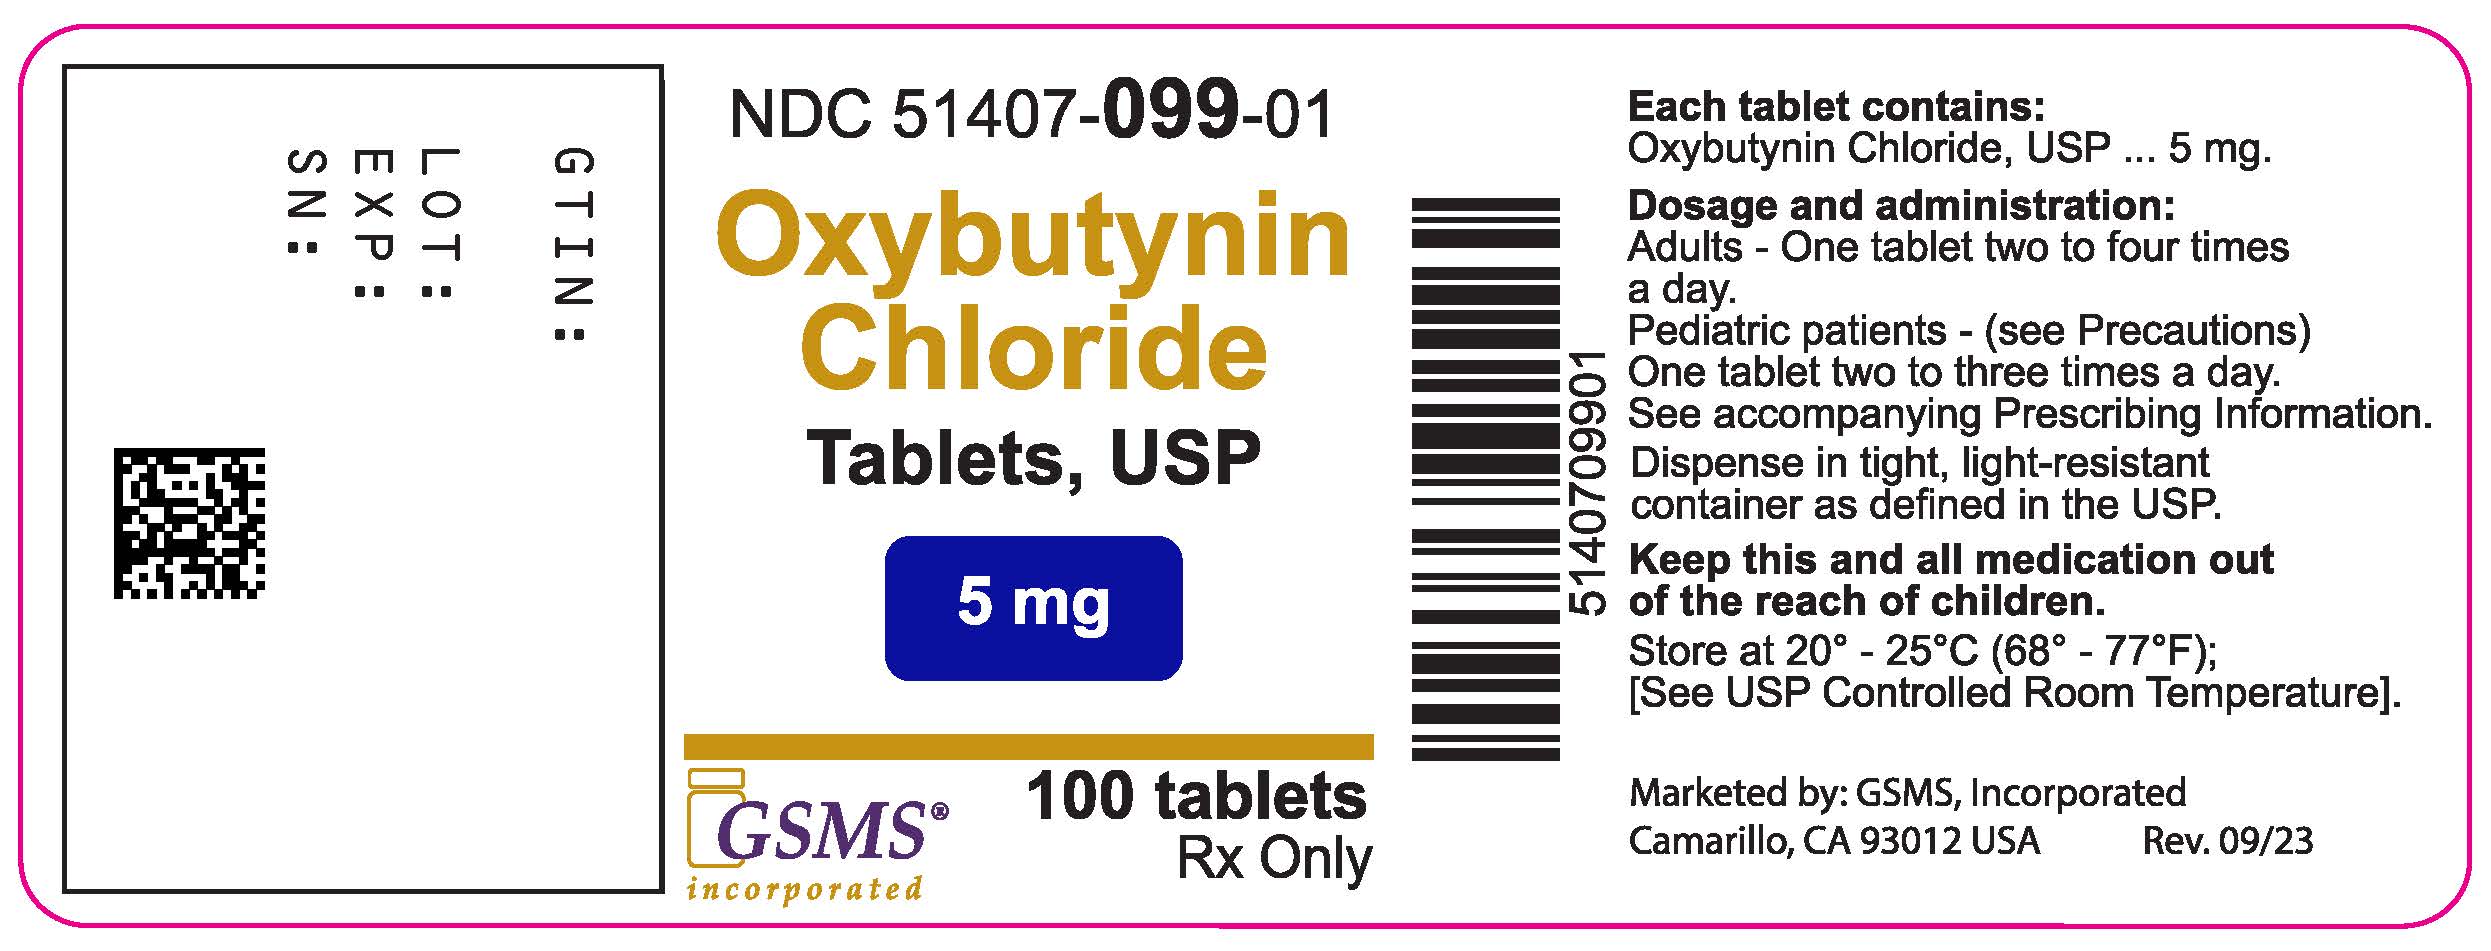 51407-099-01LB - Oxybutynin Chloride Tablets - Rev. 0923.jpg